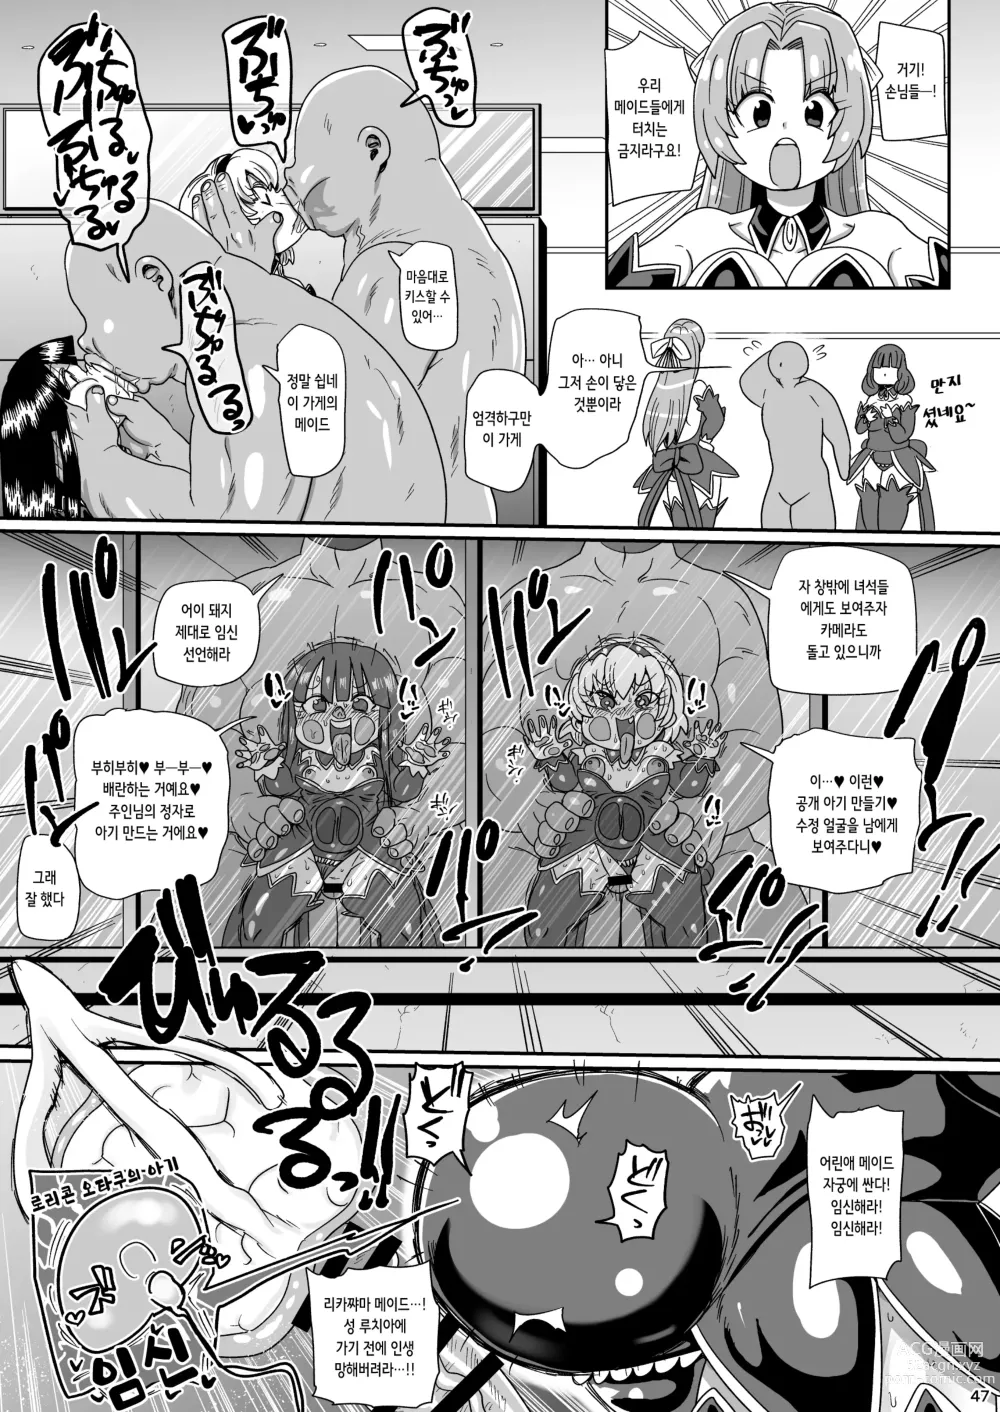 Page 47 of doujinshi 사토코와 리카와